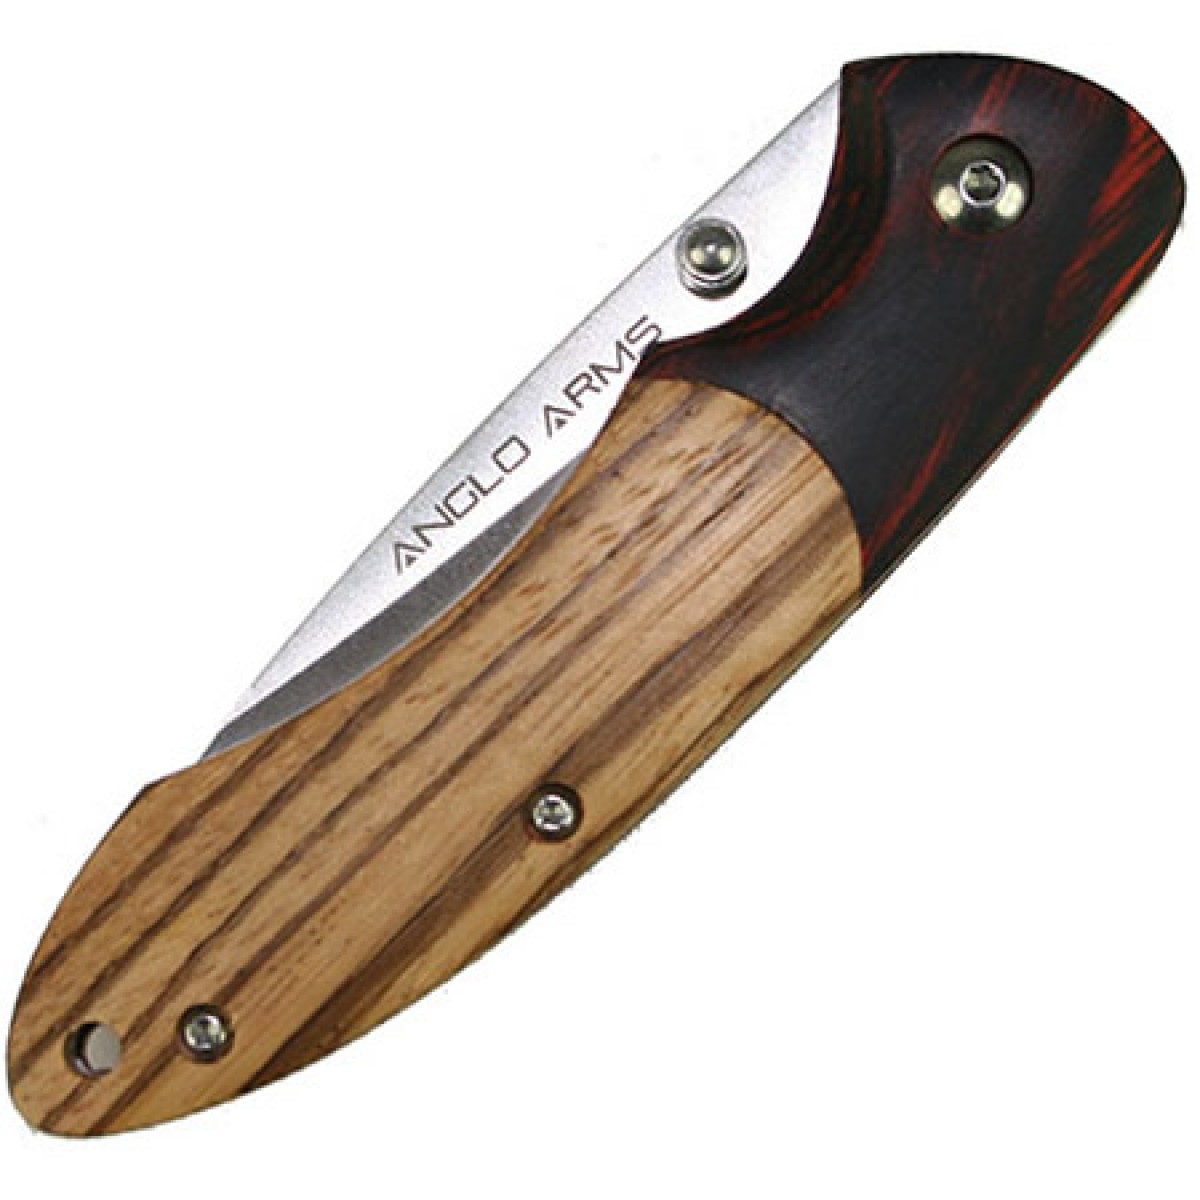 Anglo Arms lock knife with zebrawood and pakkawood handle (192